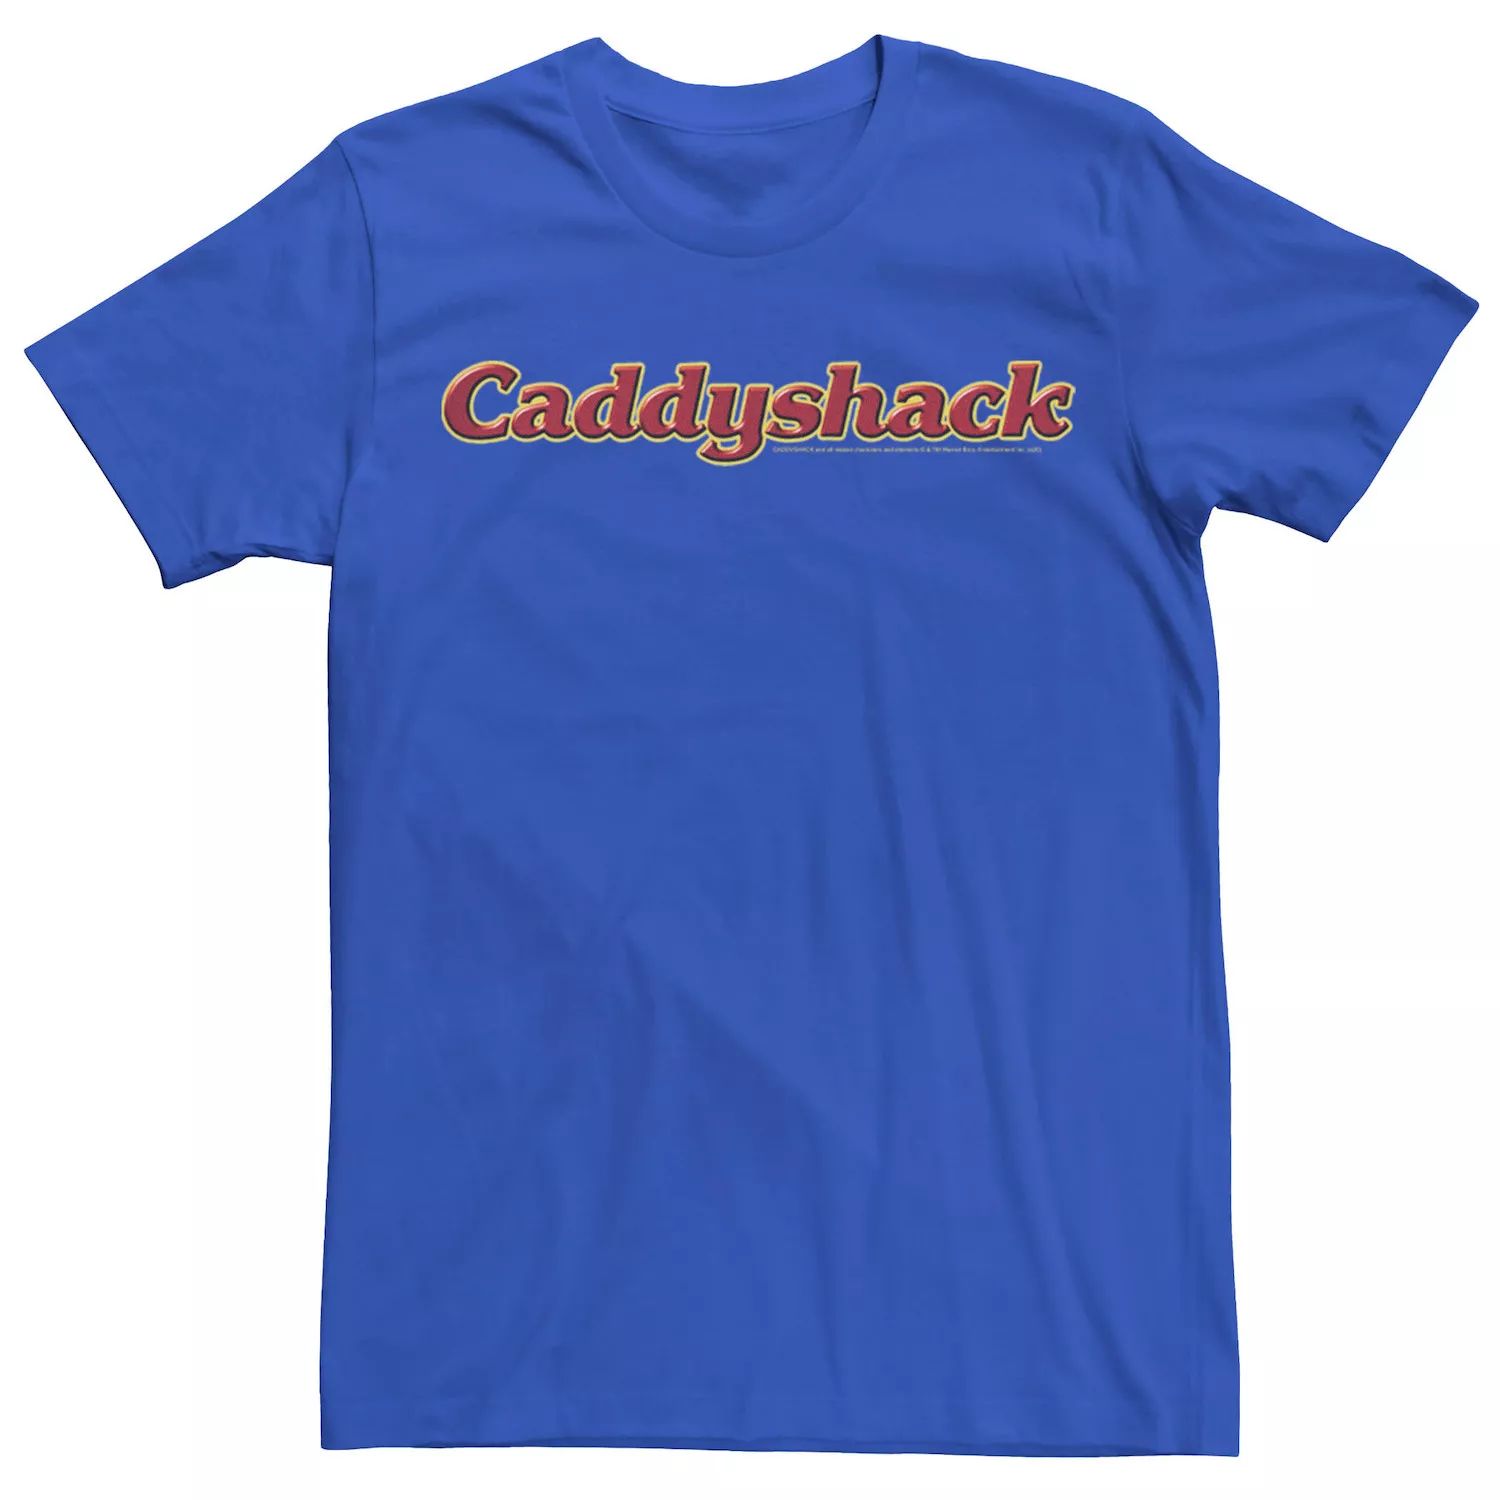 Мужская футболка с простым логотипом Caddyshack Licensed Character